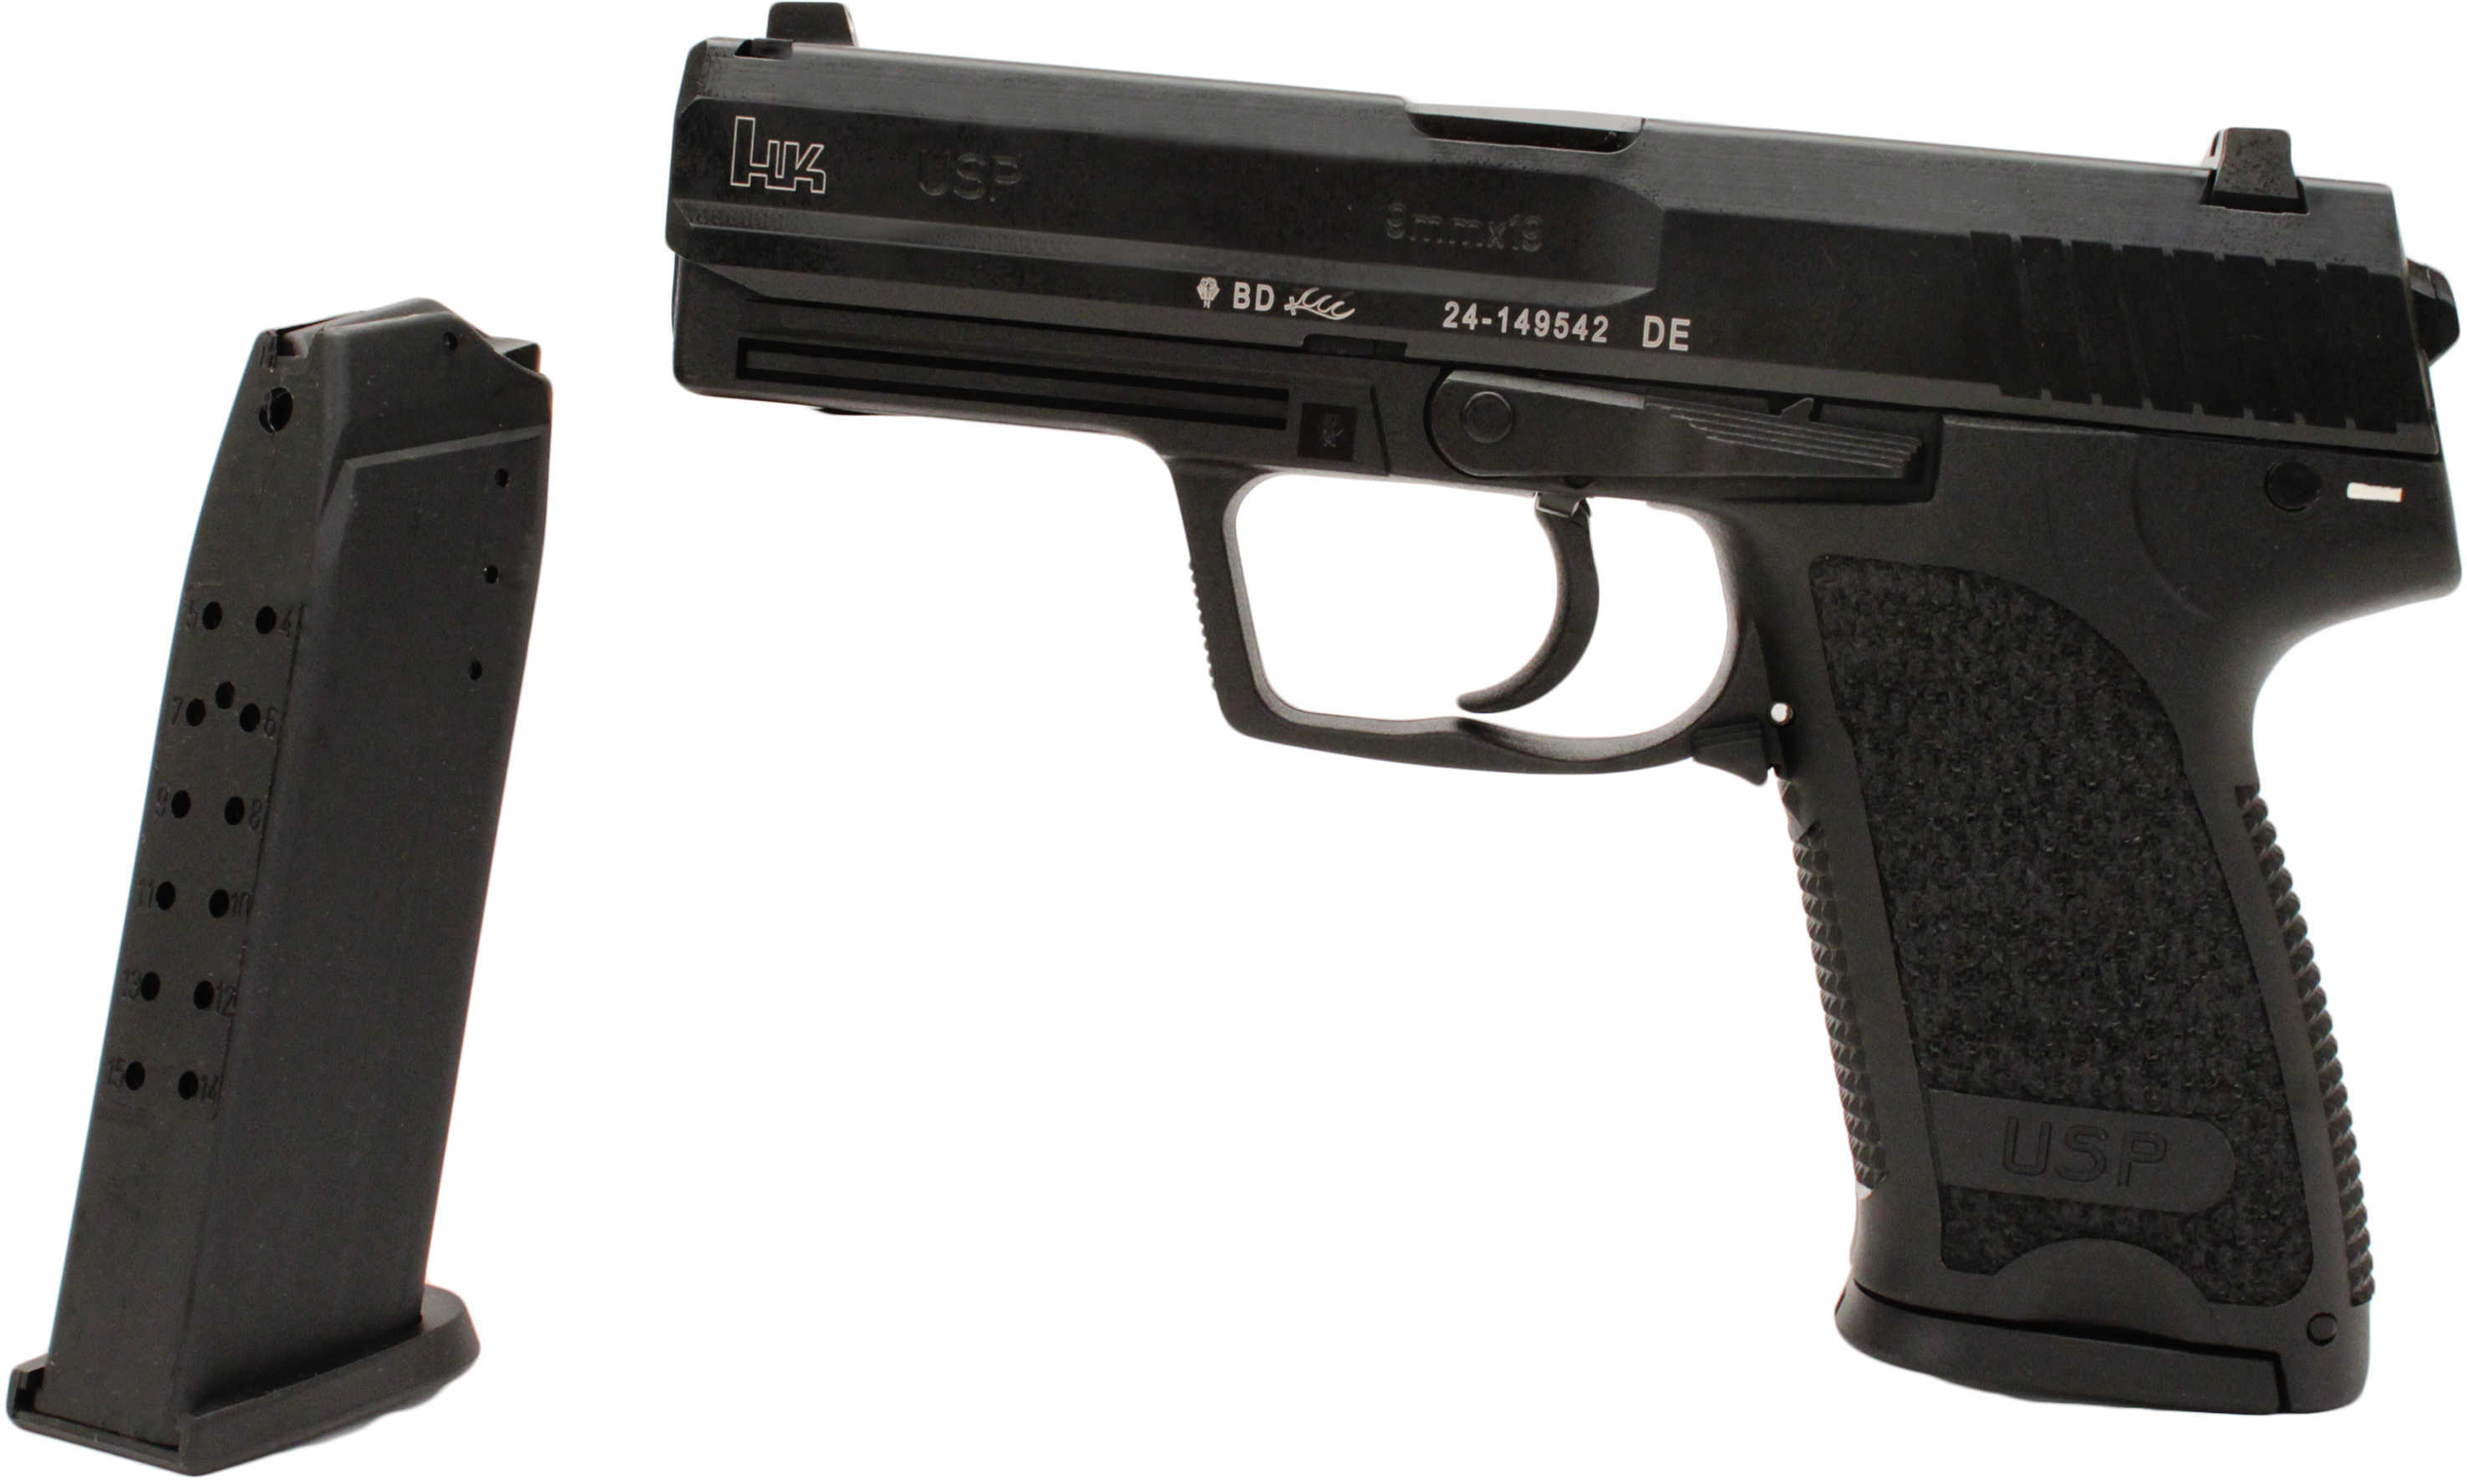 Heckler & Koch USP9 9mm Luger 4.25" Barrel 15 Round V7 LEM Double Action Only Semi Automatic Pistol M709007-A5